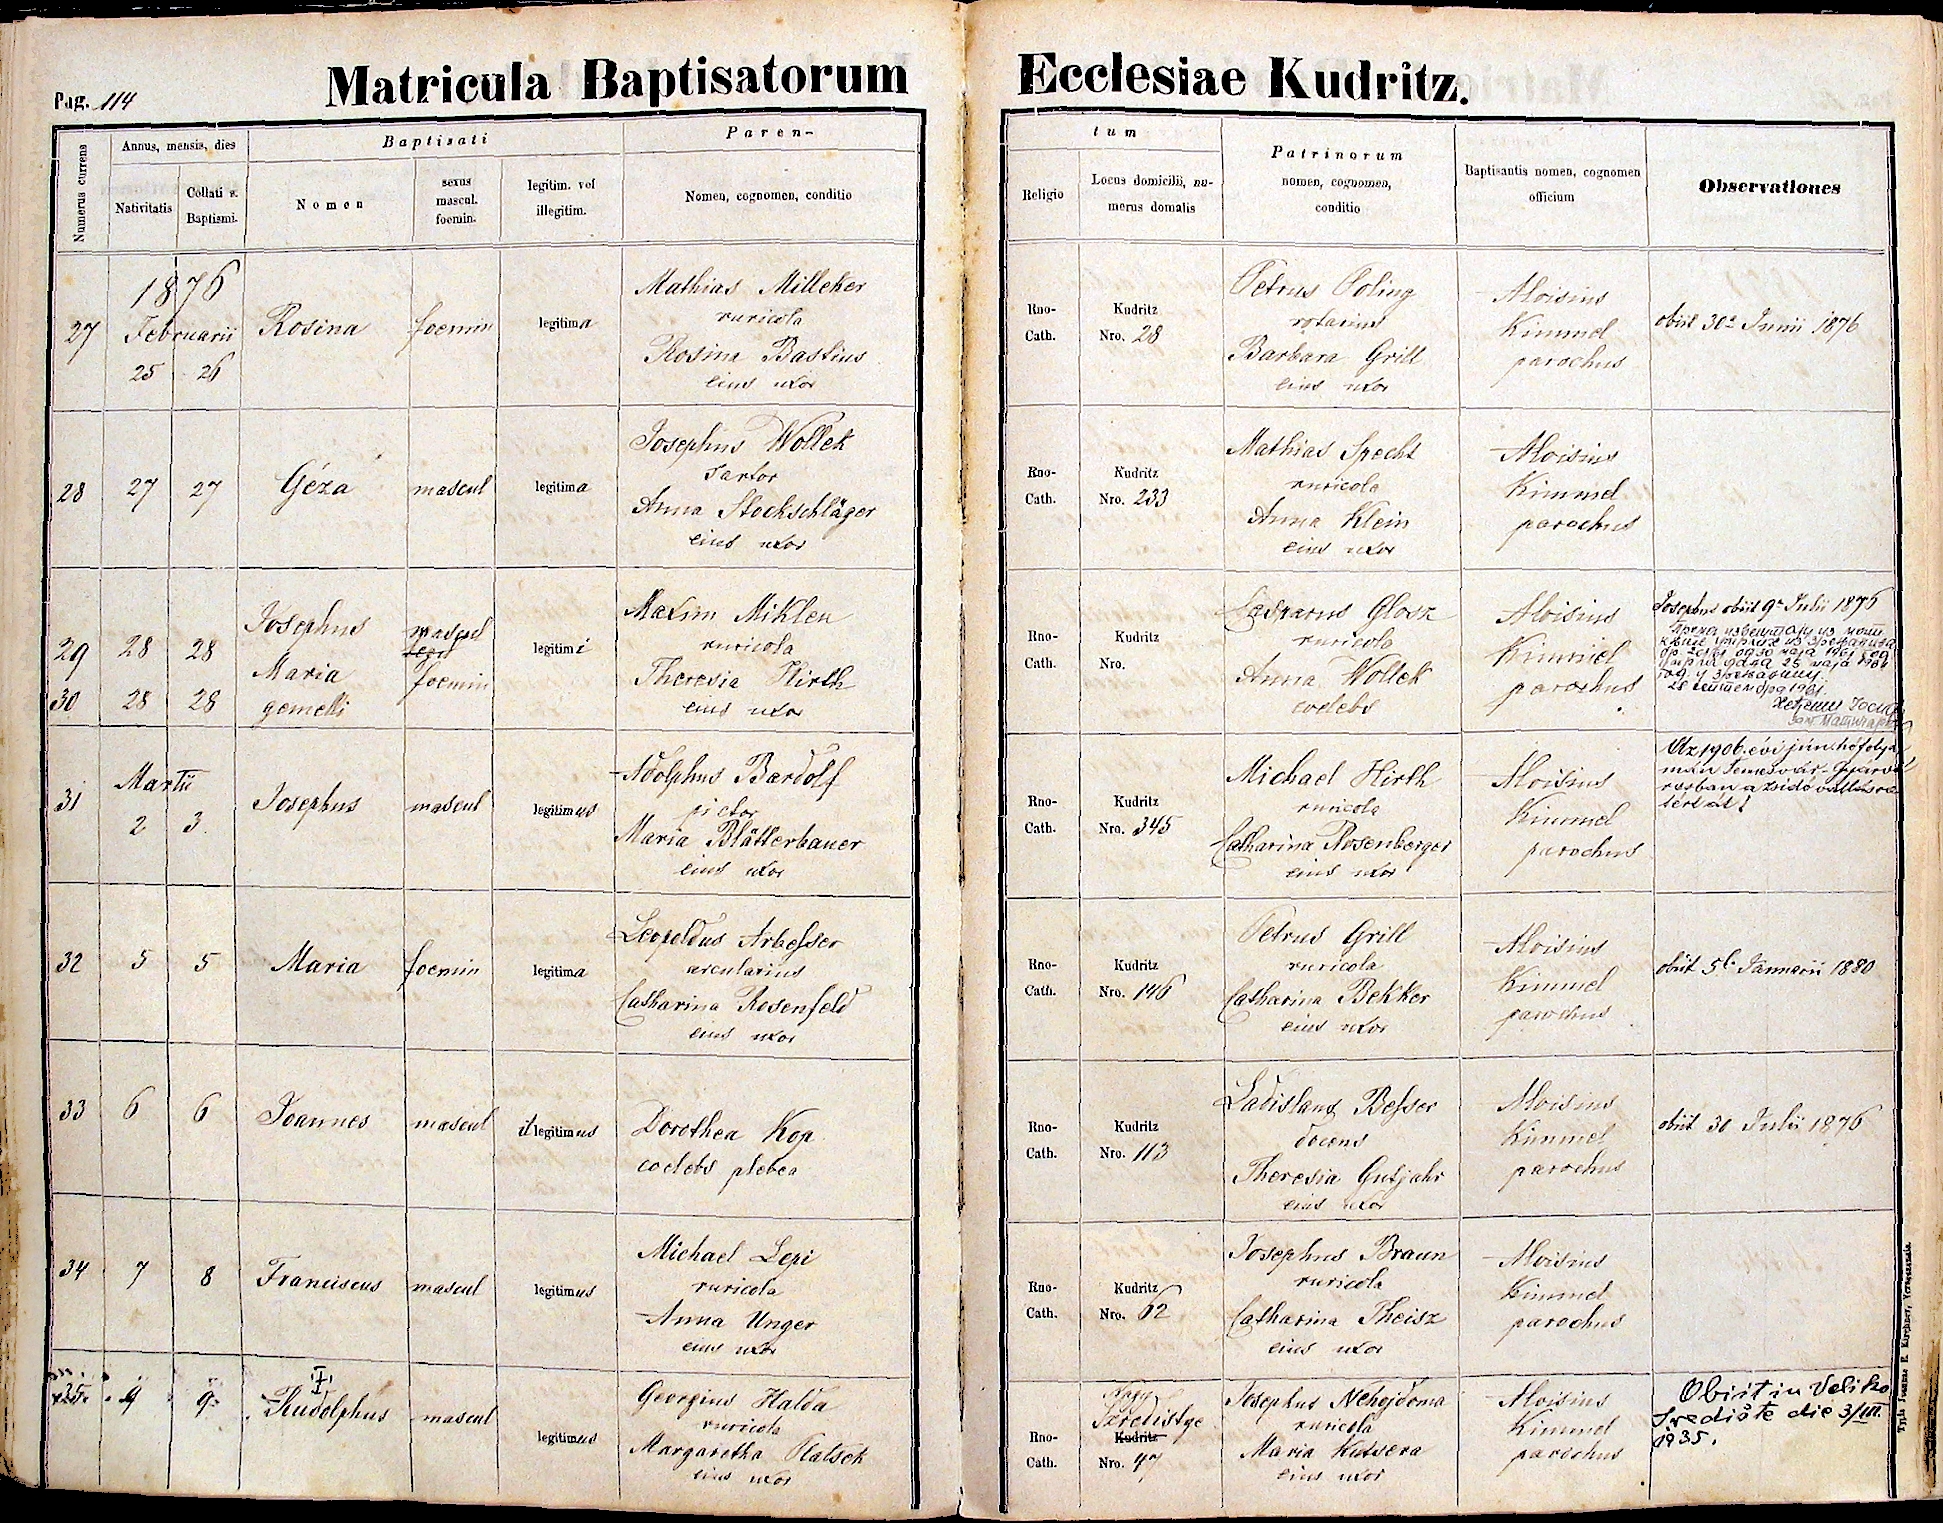 images/church_records/BIRTHS/1870-1879B/1876/114